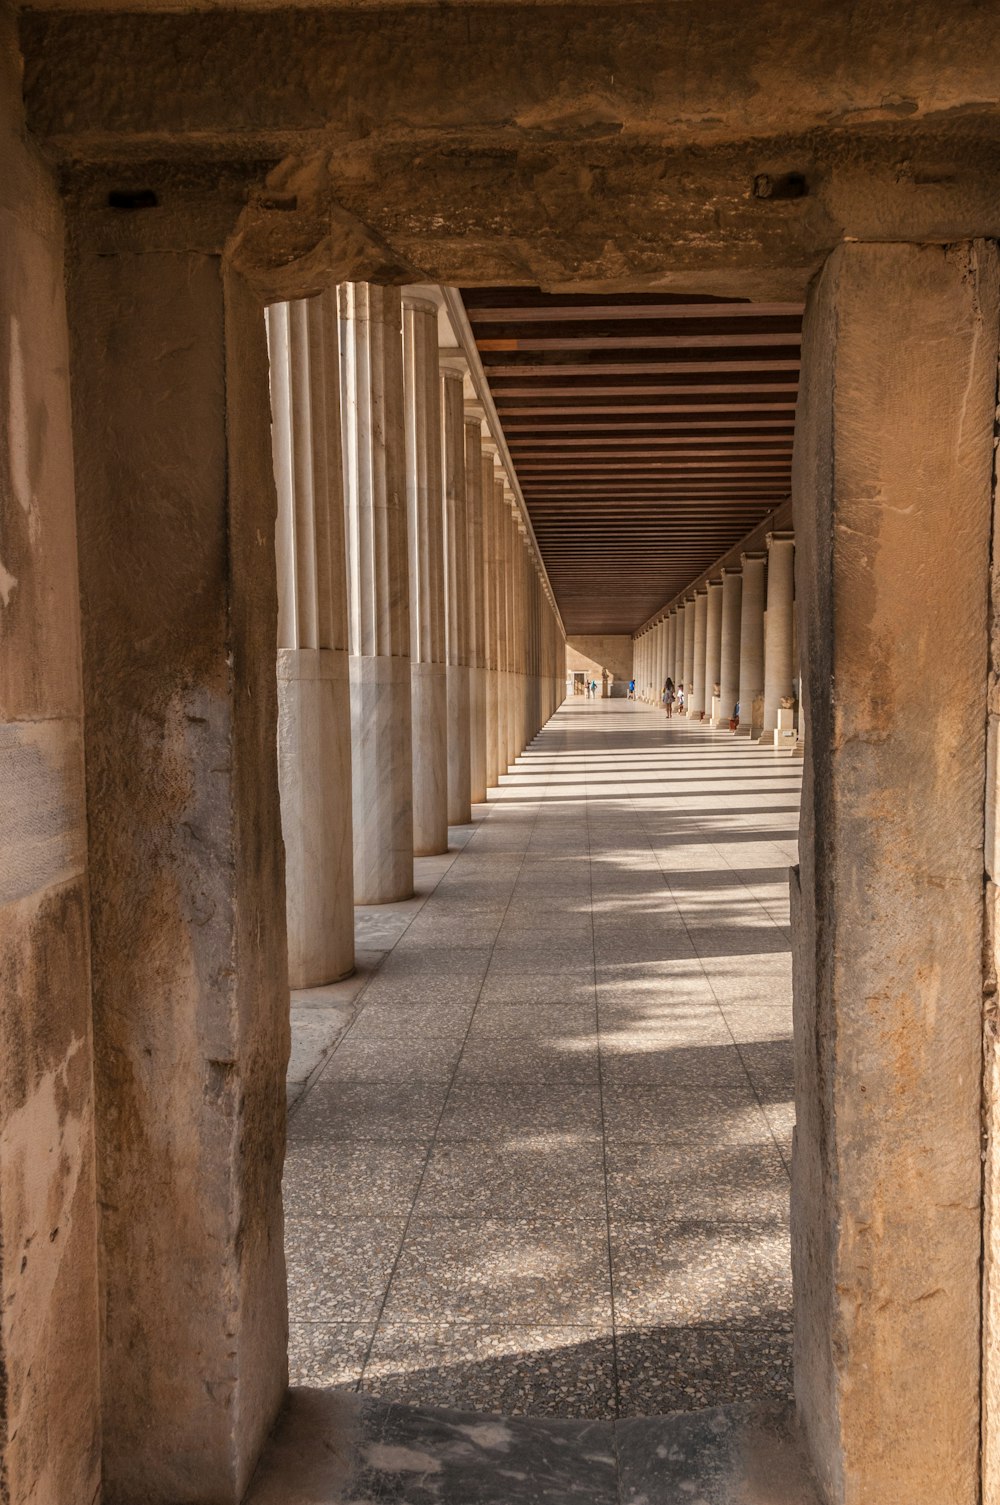 a hallway with columns